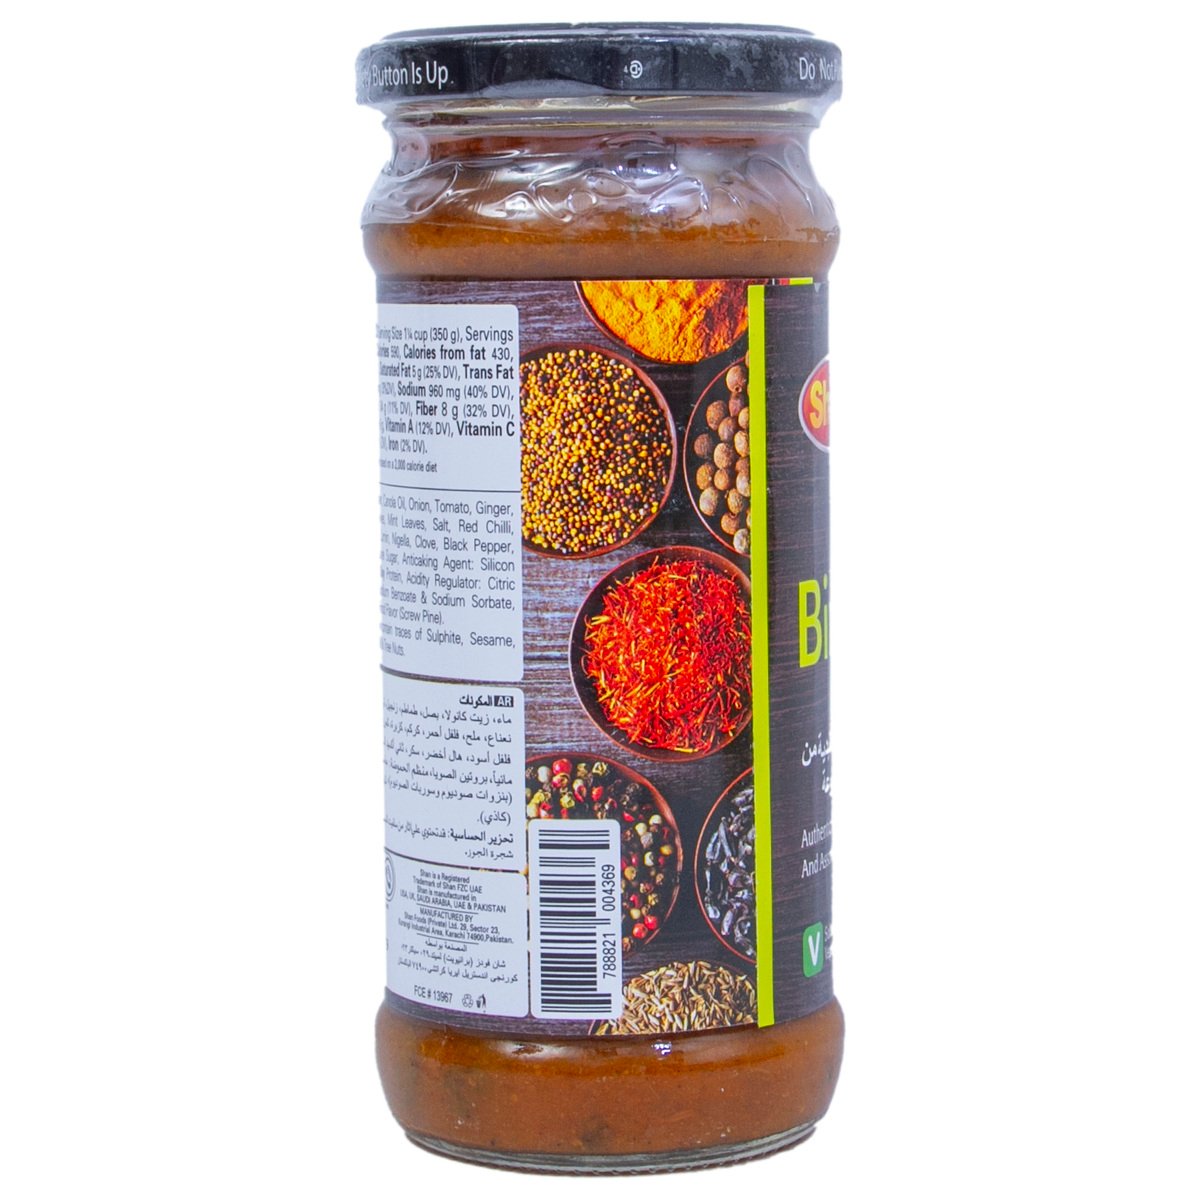 Shan Biryani Sauce 350 g